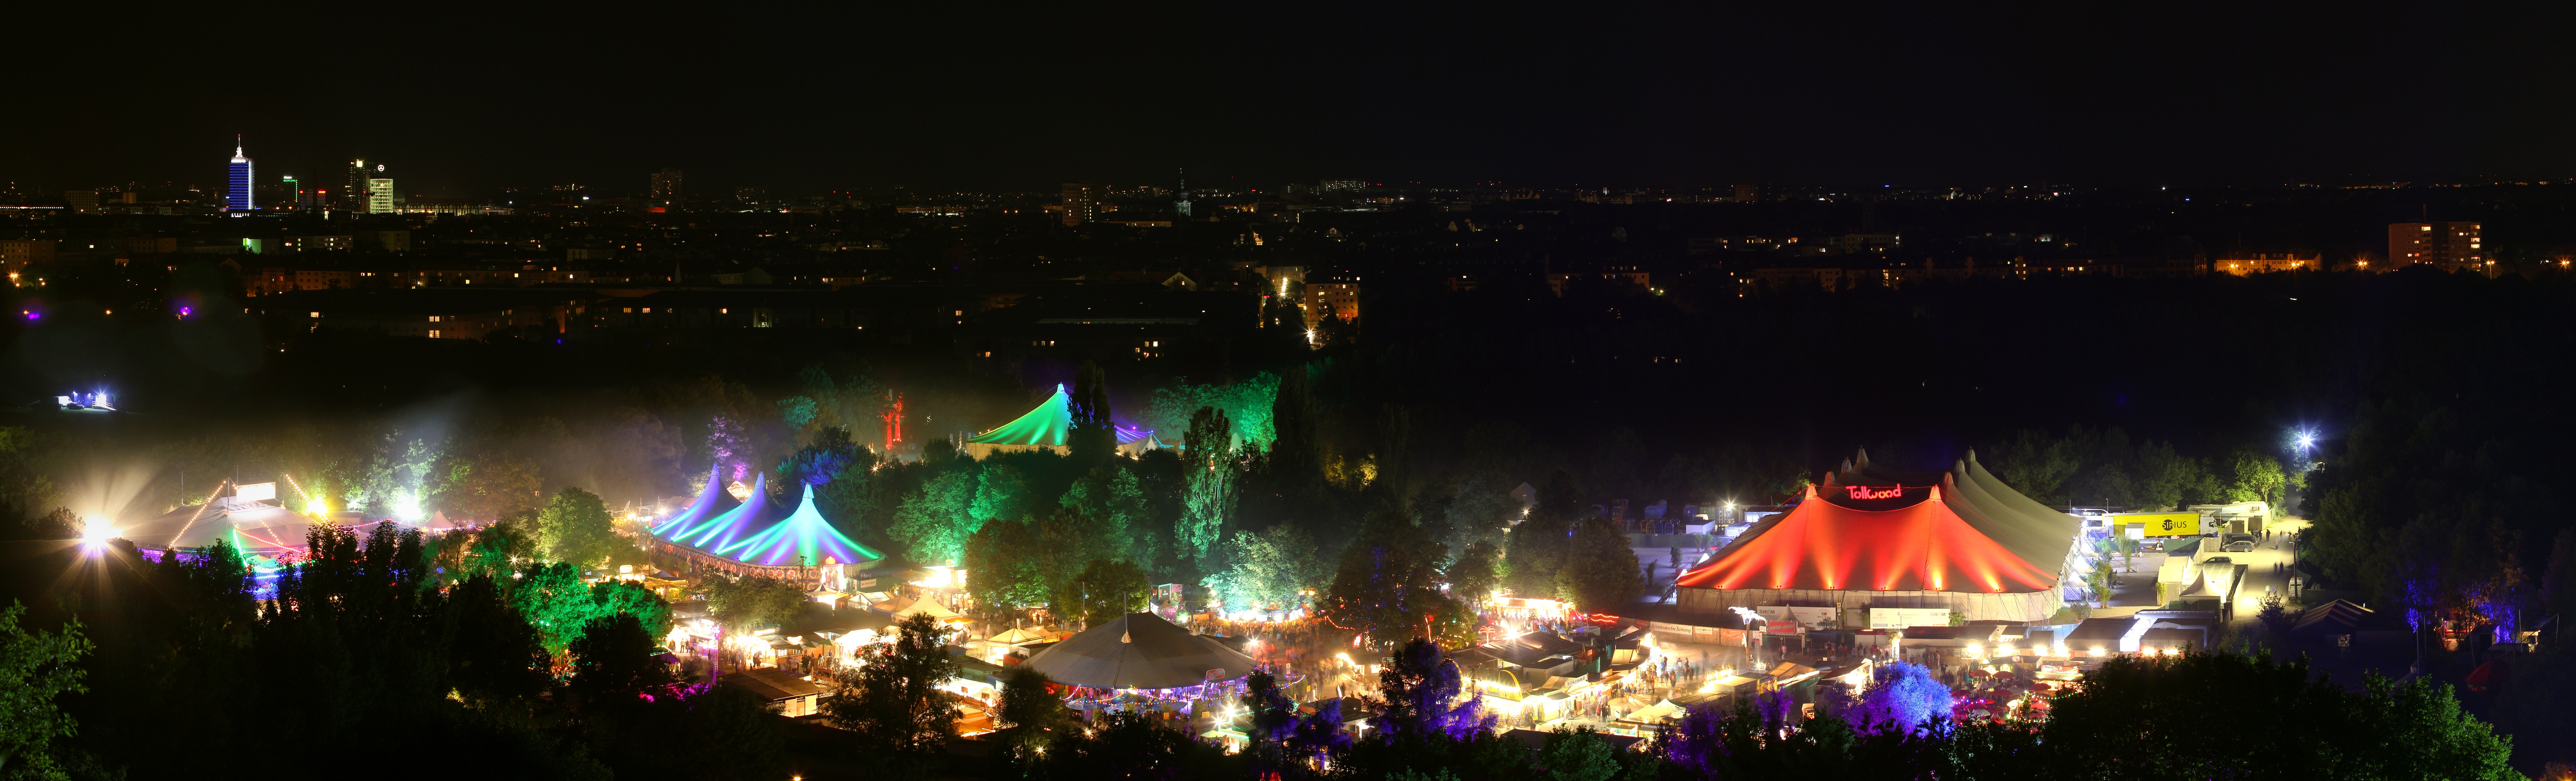 File:2013-07-13 Tollwood-Festival Night Panorama.jpg - Wikimedia Commons